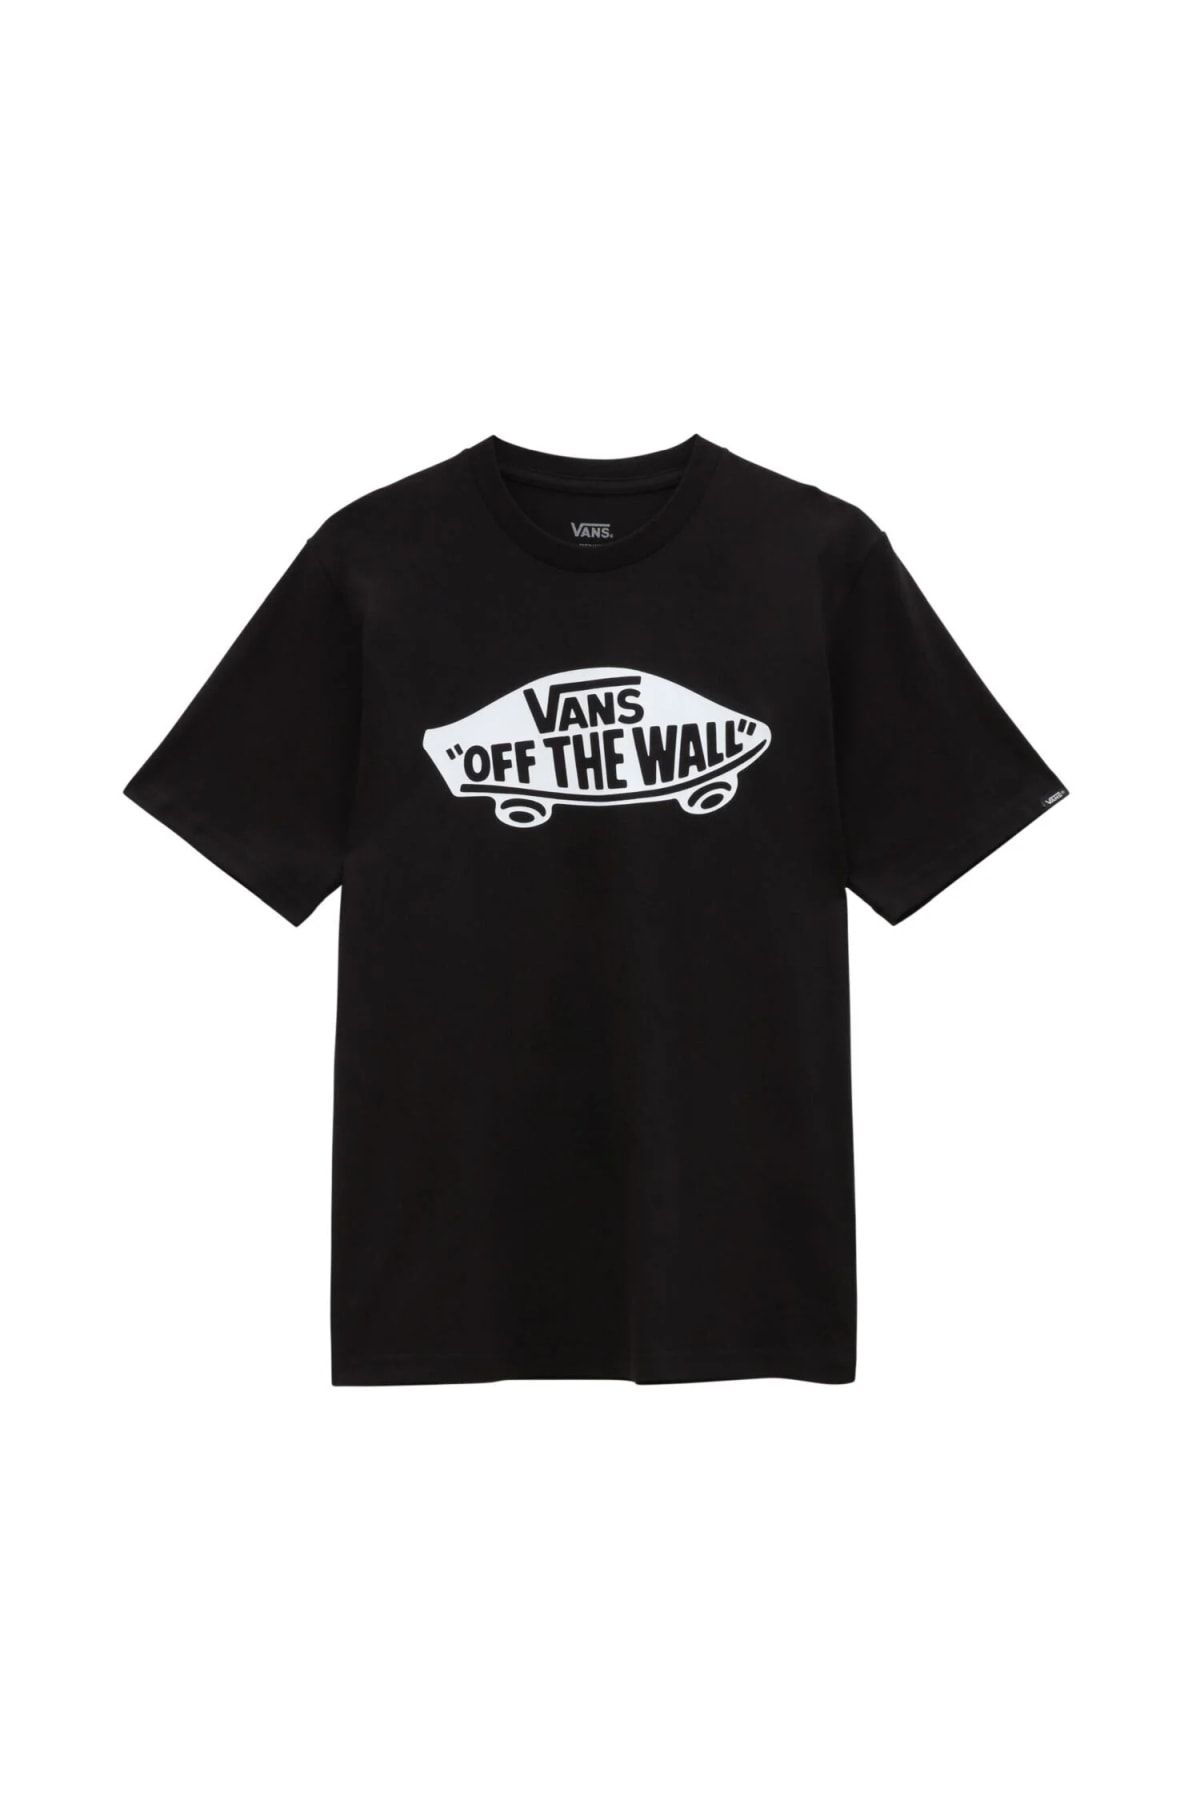 Vans OTW BOARD-B Erkek Çocuk T-Shirt - VN0005FA Siyah/Beyaz